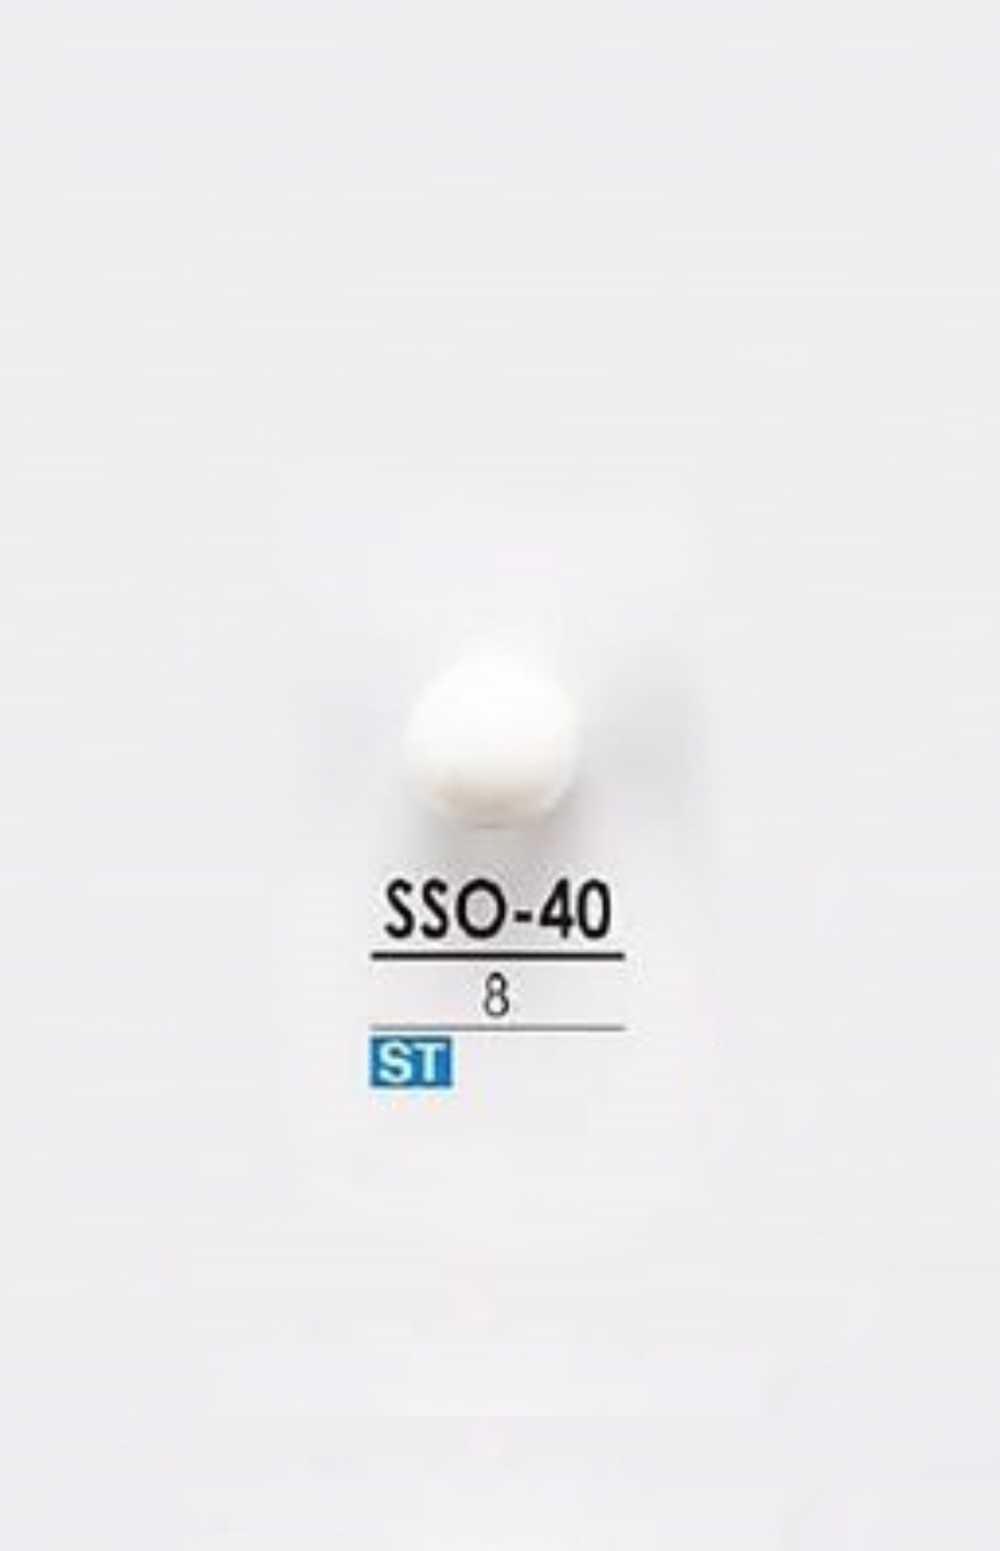 SSO-40 Shell Tunnel Foot Button IRIS